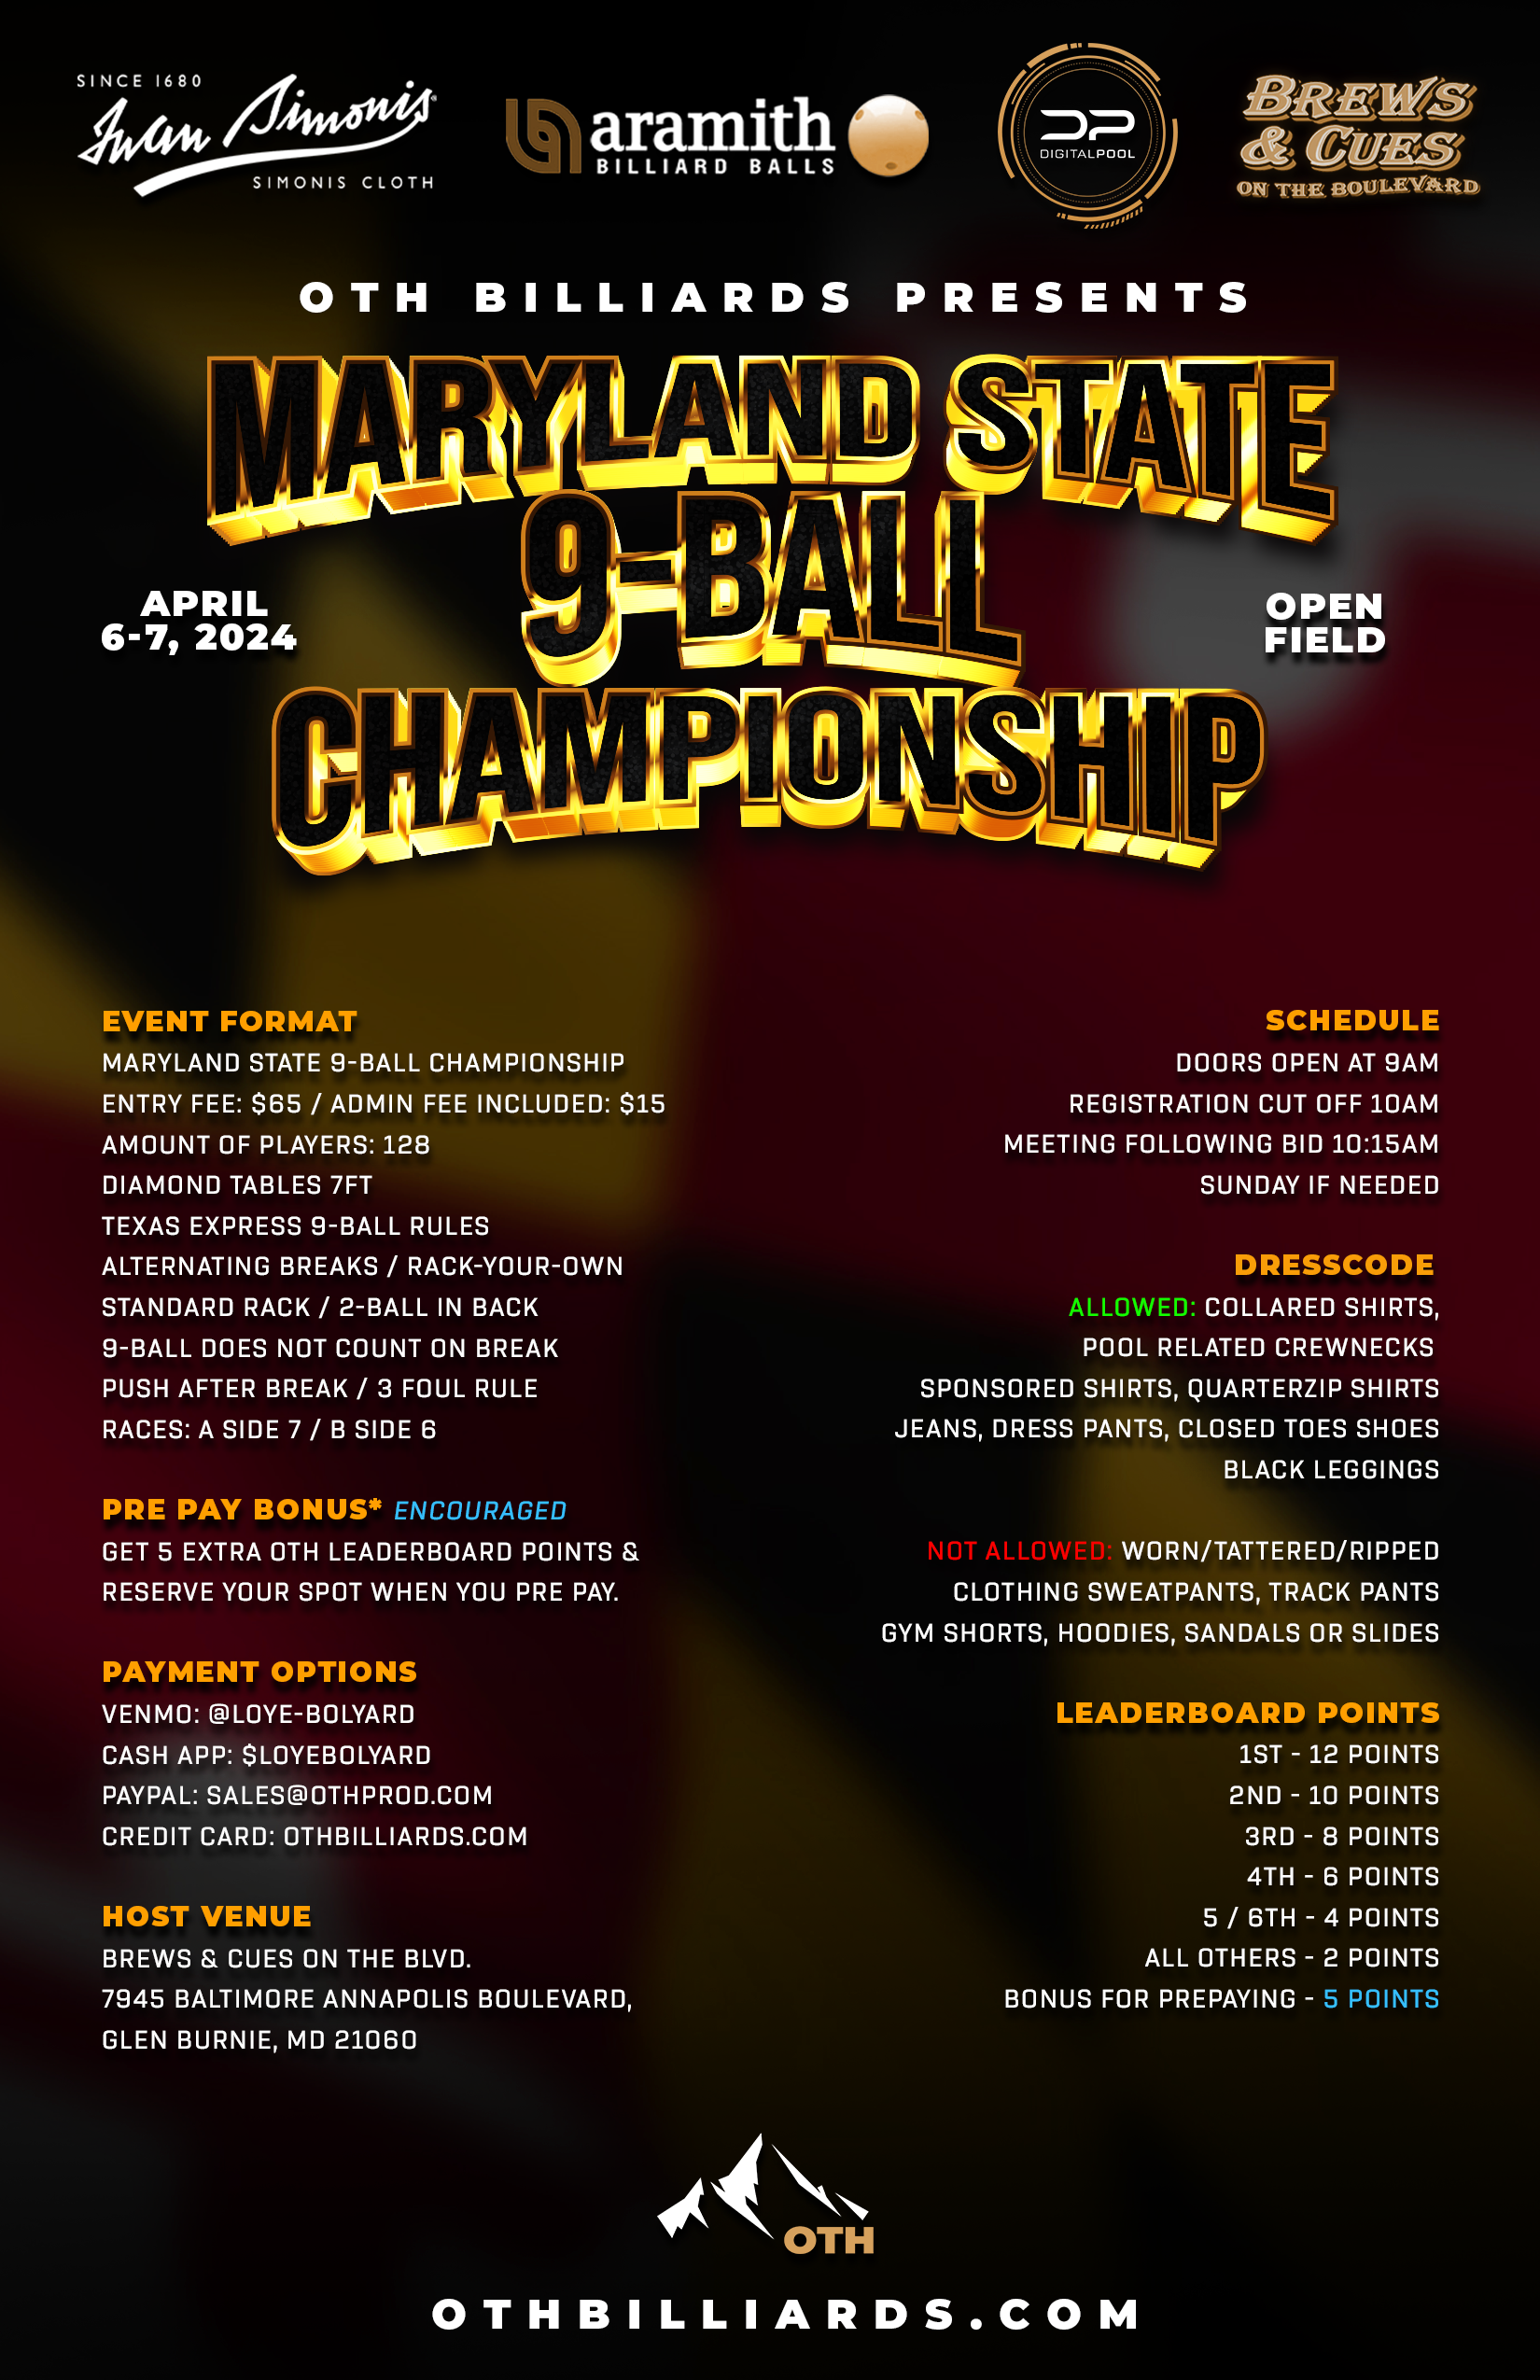 Maryland State Bar Table 9-Ball Championship